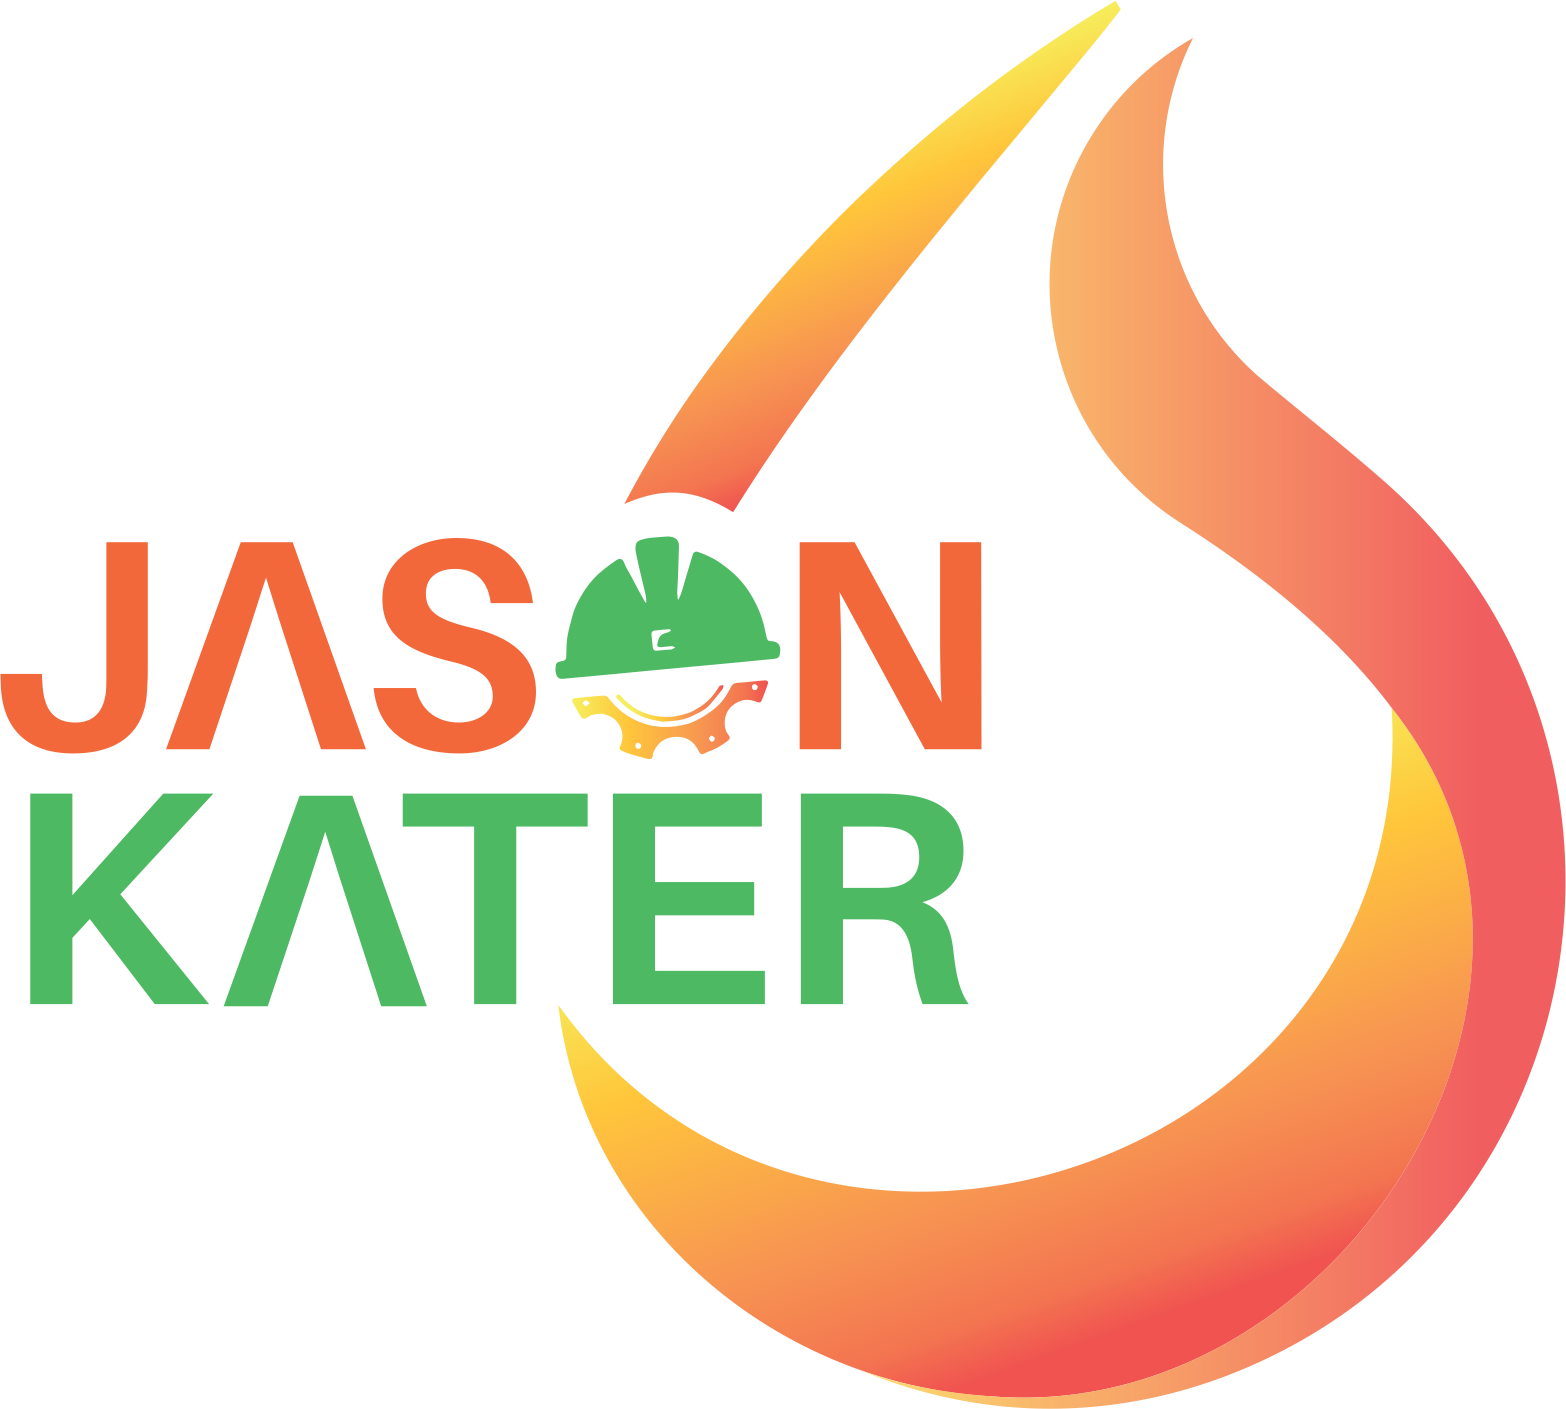 Jason Kater